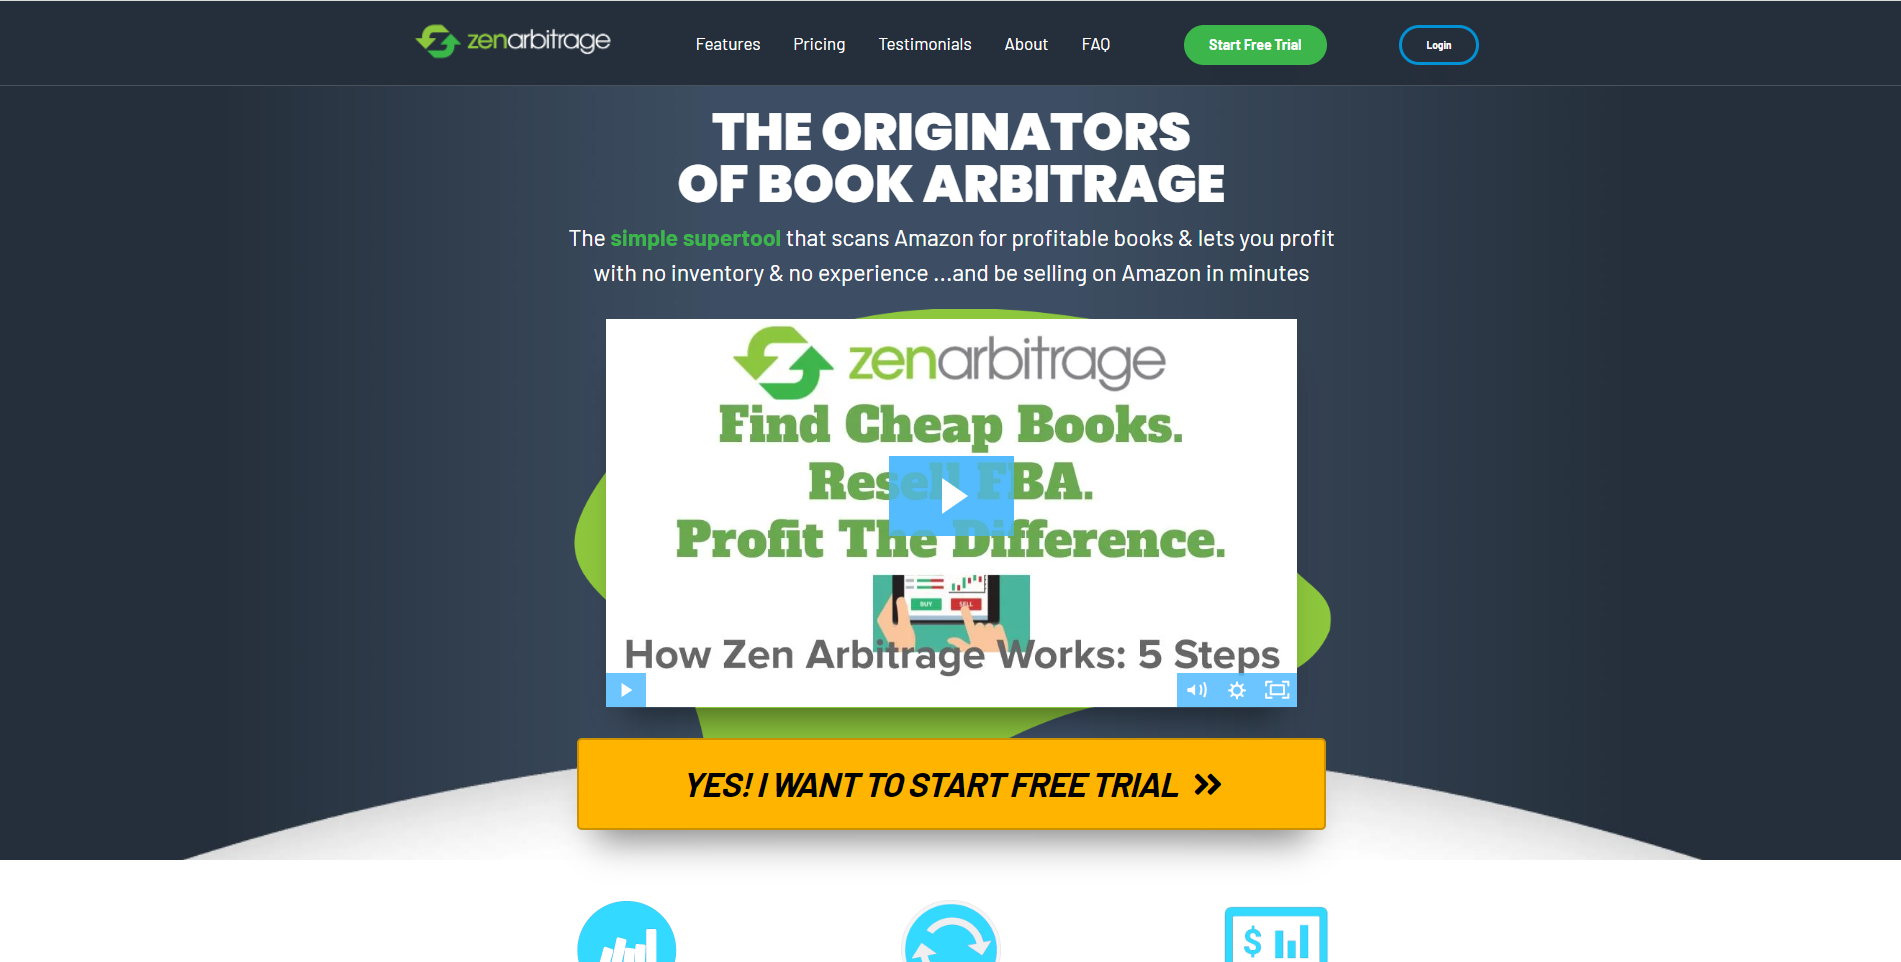 ZenArbitrage - THE ORIGINATORS OF BOOK ARBITRAGE